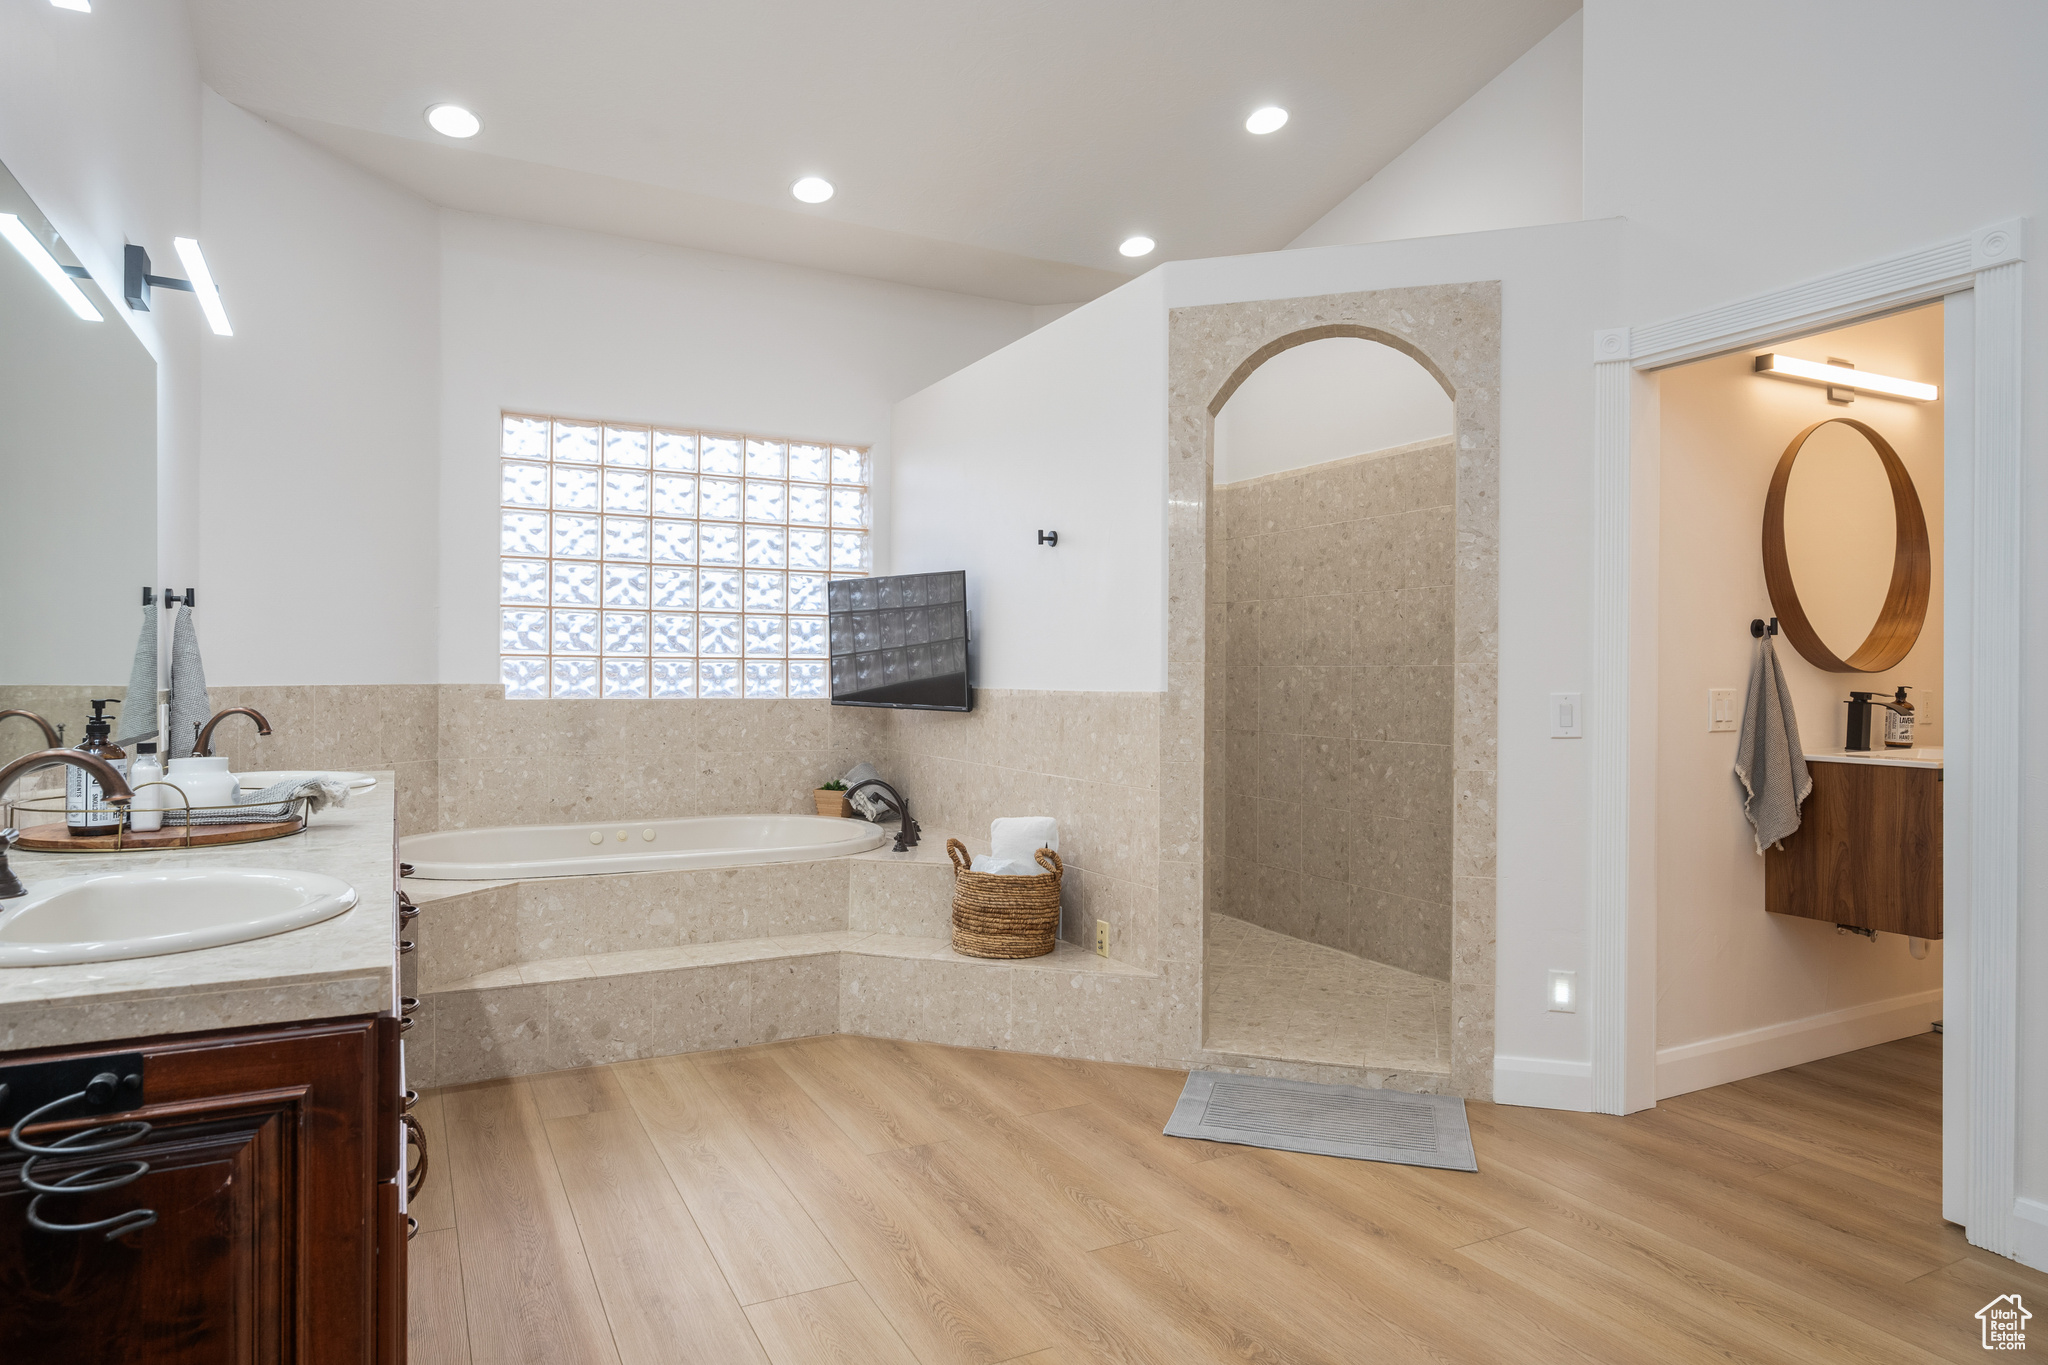 Bathroom with dual bowl vanity, hardwood / wood-style flooring, lofted ceiling, and tiled bath